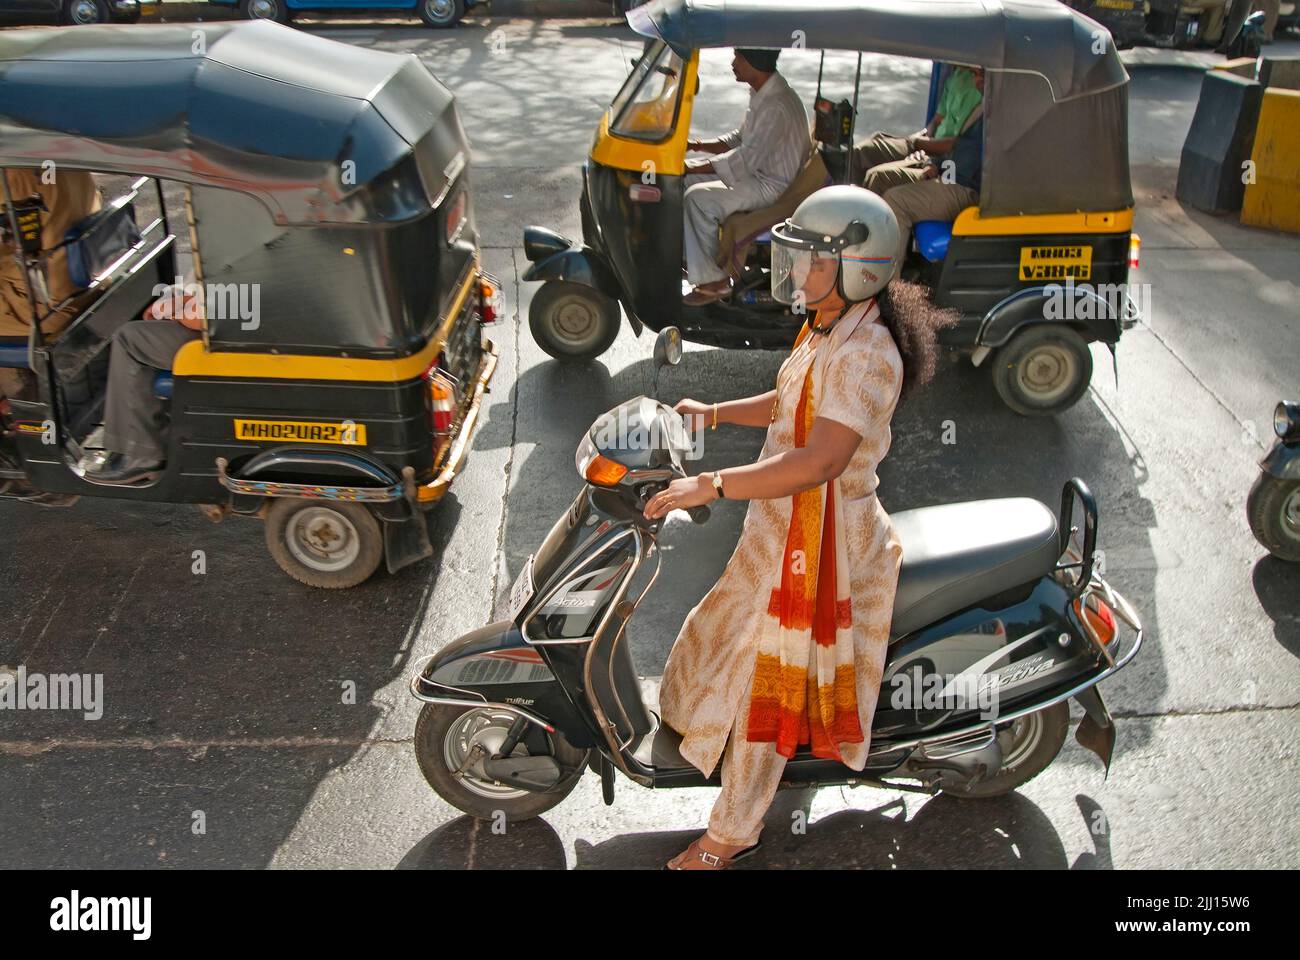 Young woman on scooter. Mumbai, India Stock Photo